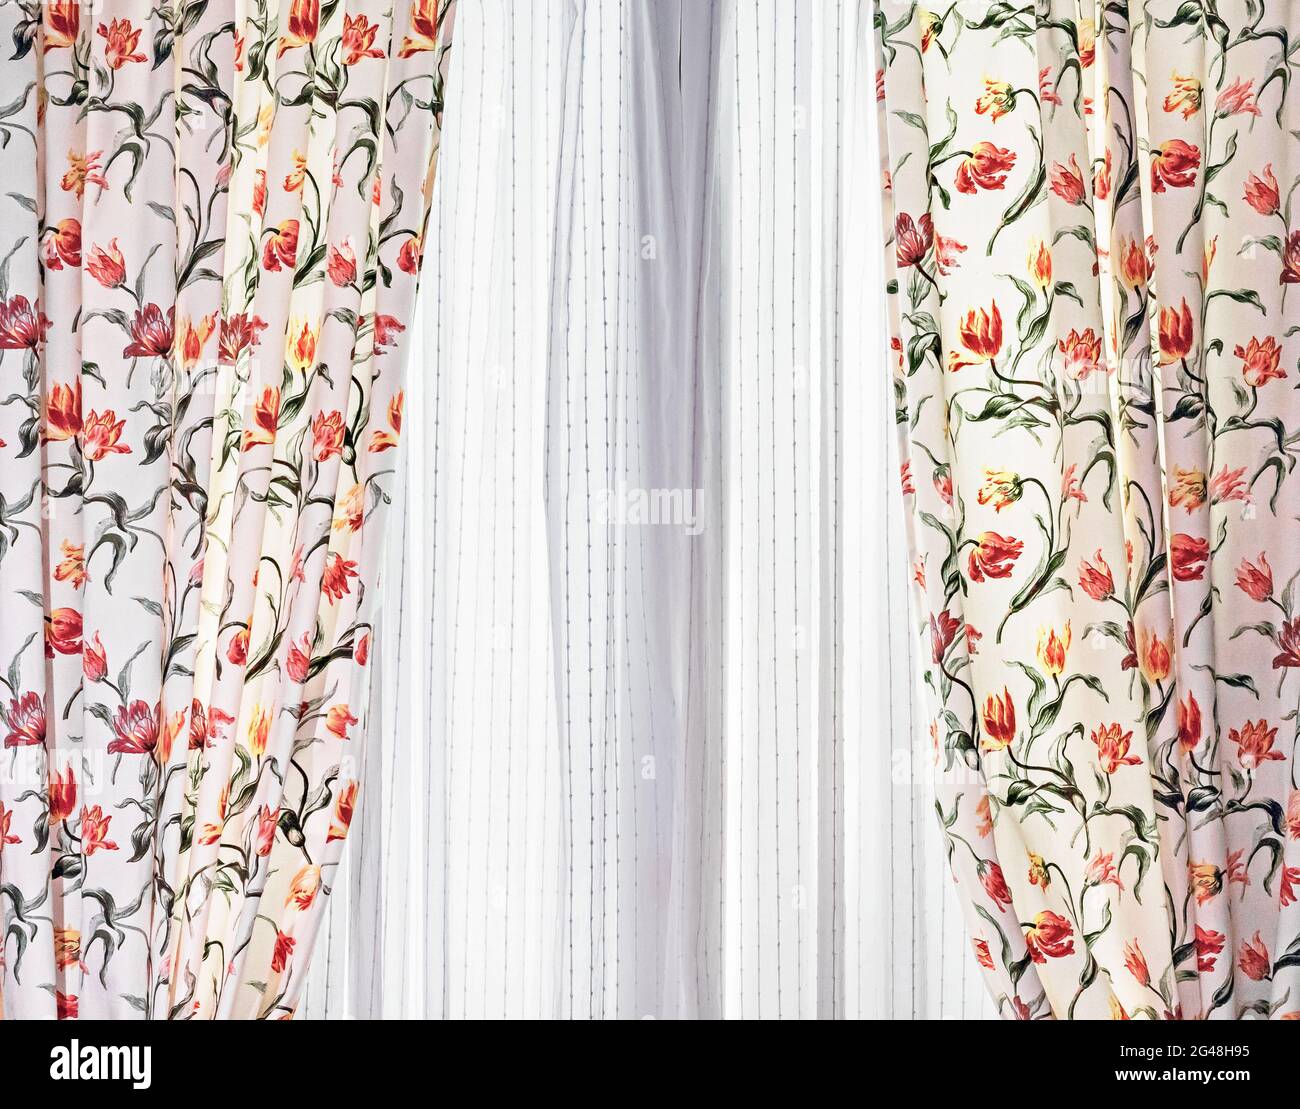 doble barra cortina - Buscar con Google  Tringle rideau, Double rideaux,  Rideaux